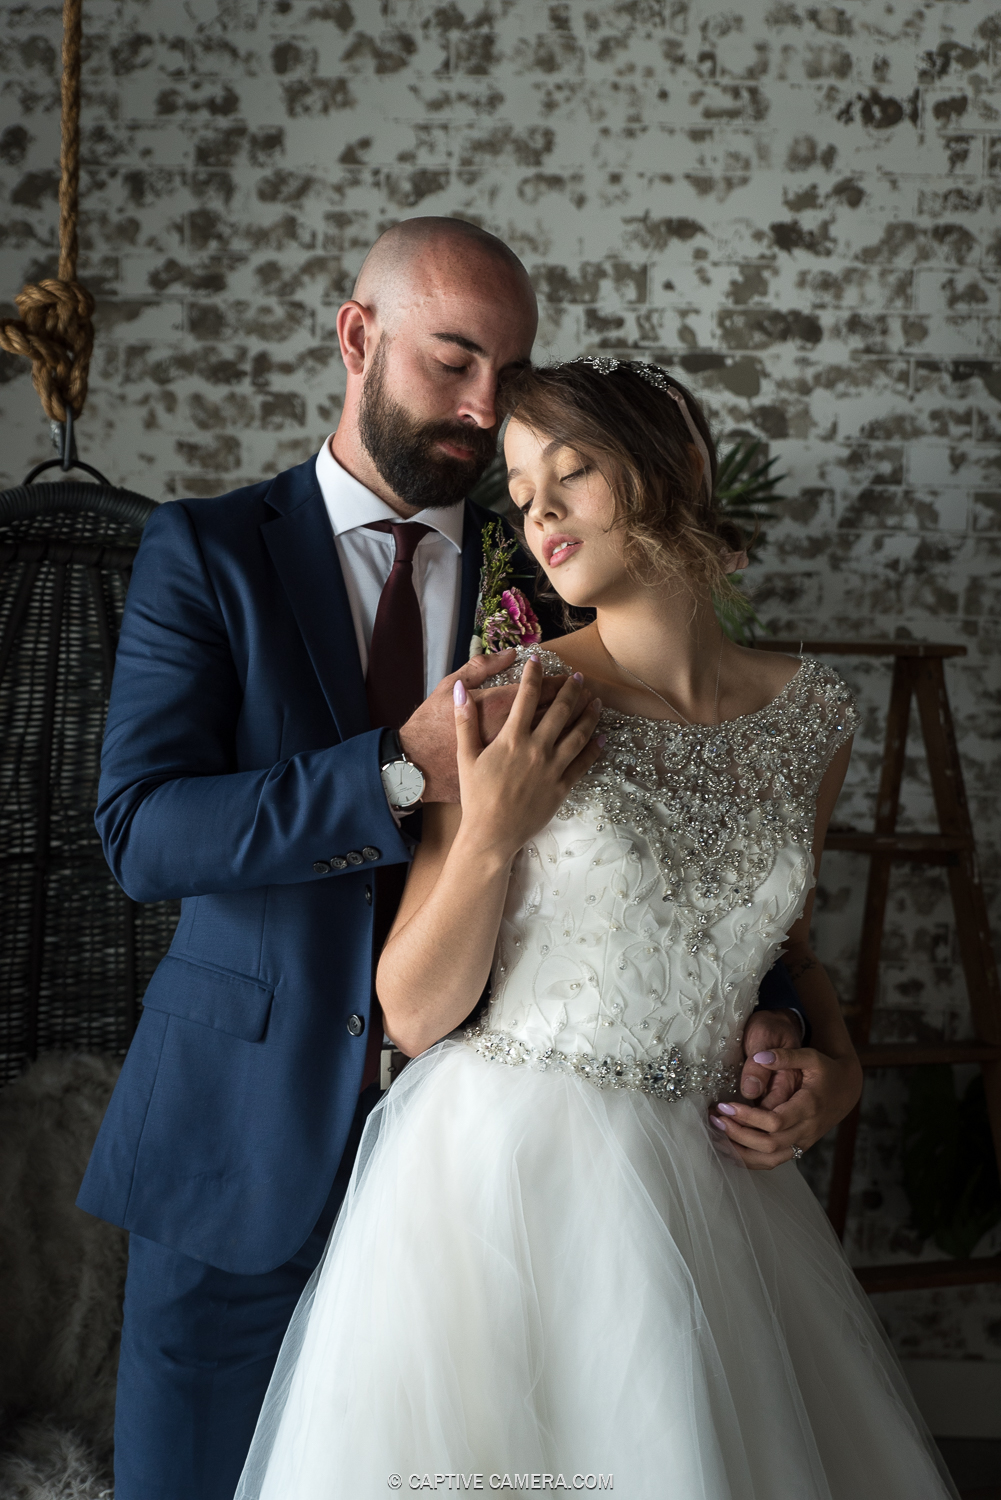 20190713 - Styled Wedding - Captive Camera-1112.jpg